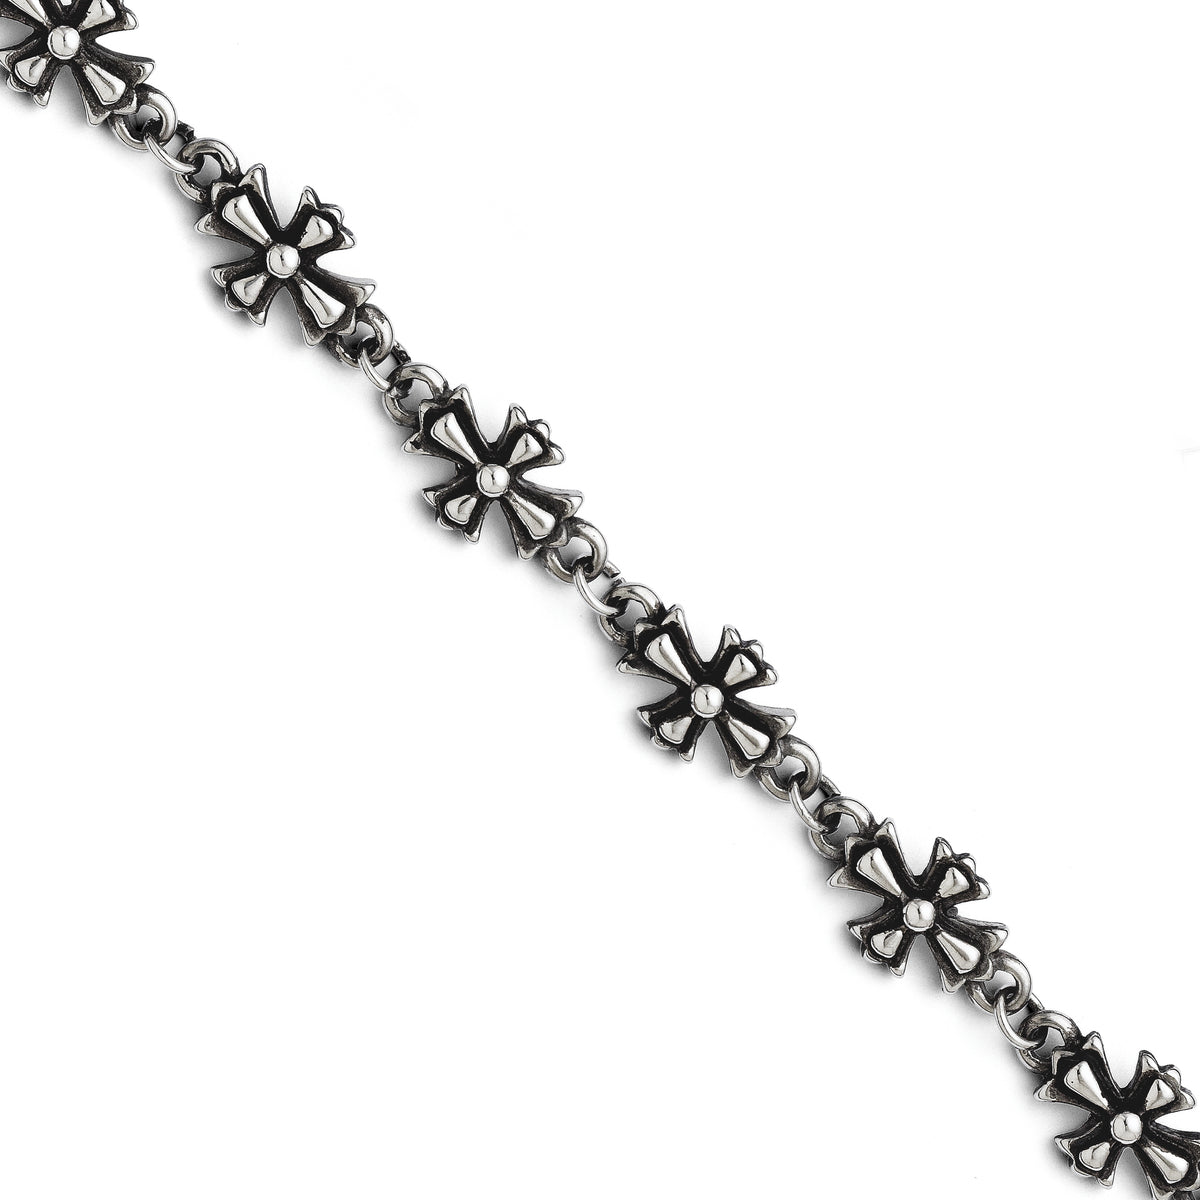 Stainless Steel Antiqued Crosses Bracelet